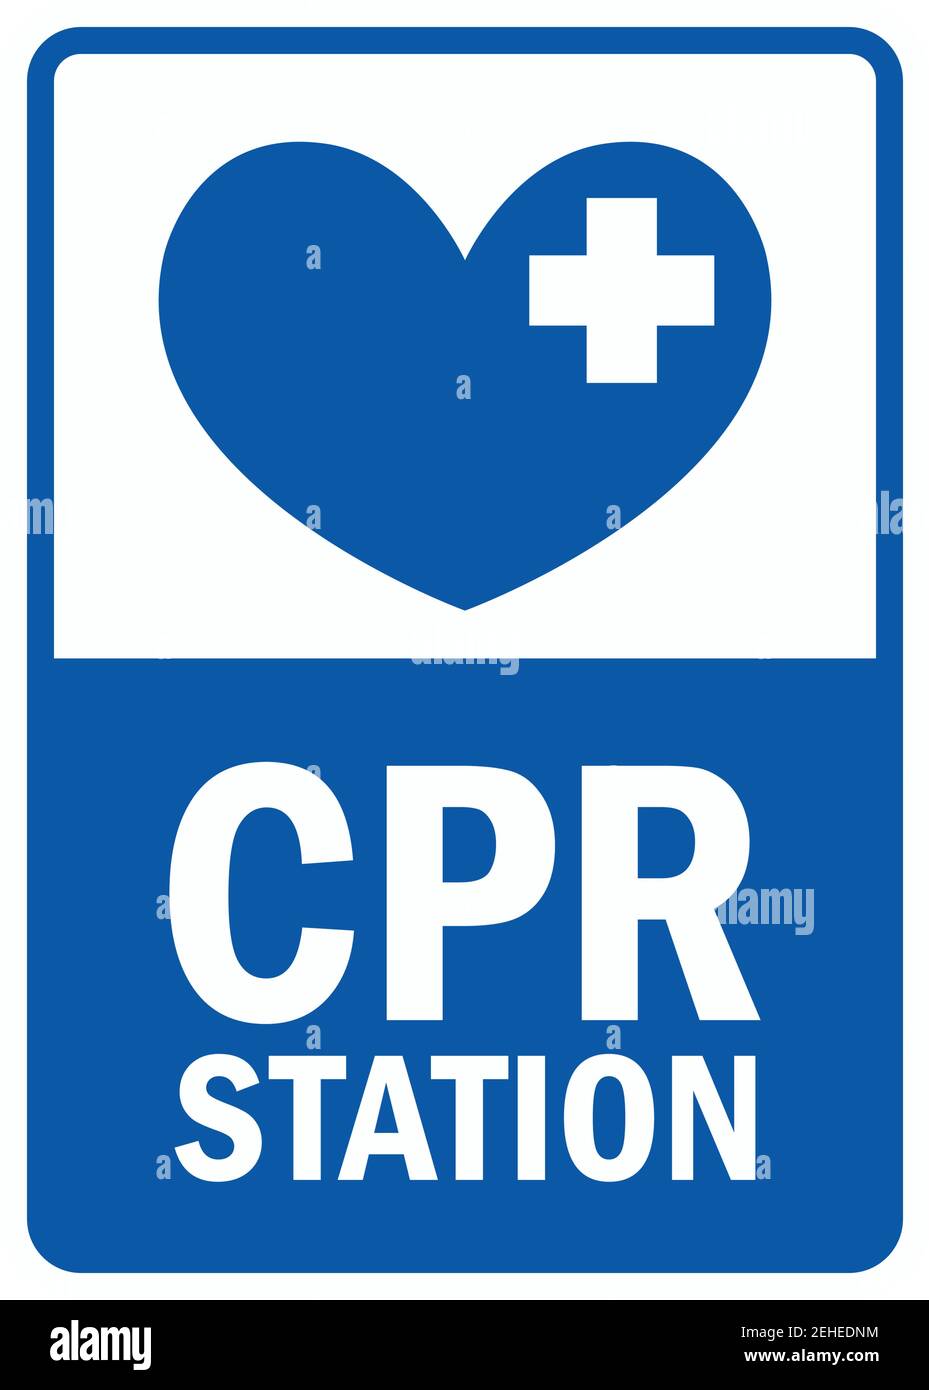 CPR Cardiopulmonary Resuscitation sign and symbol. vector illustration Stock Vector